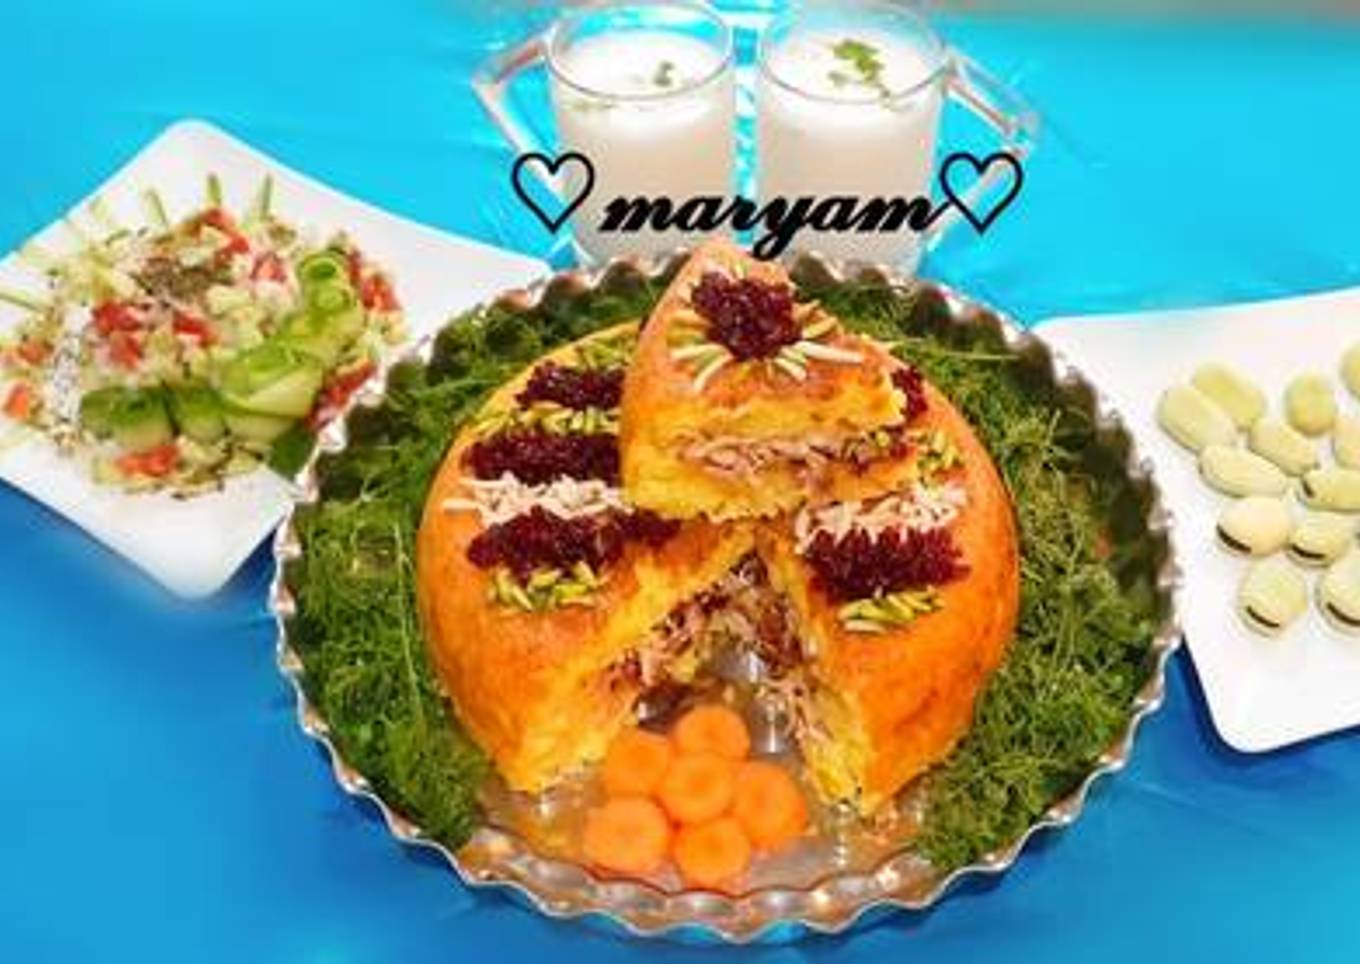 Tah chin (Iranian Rice Cake)